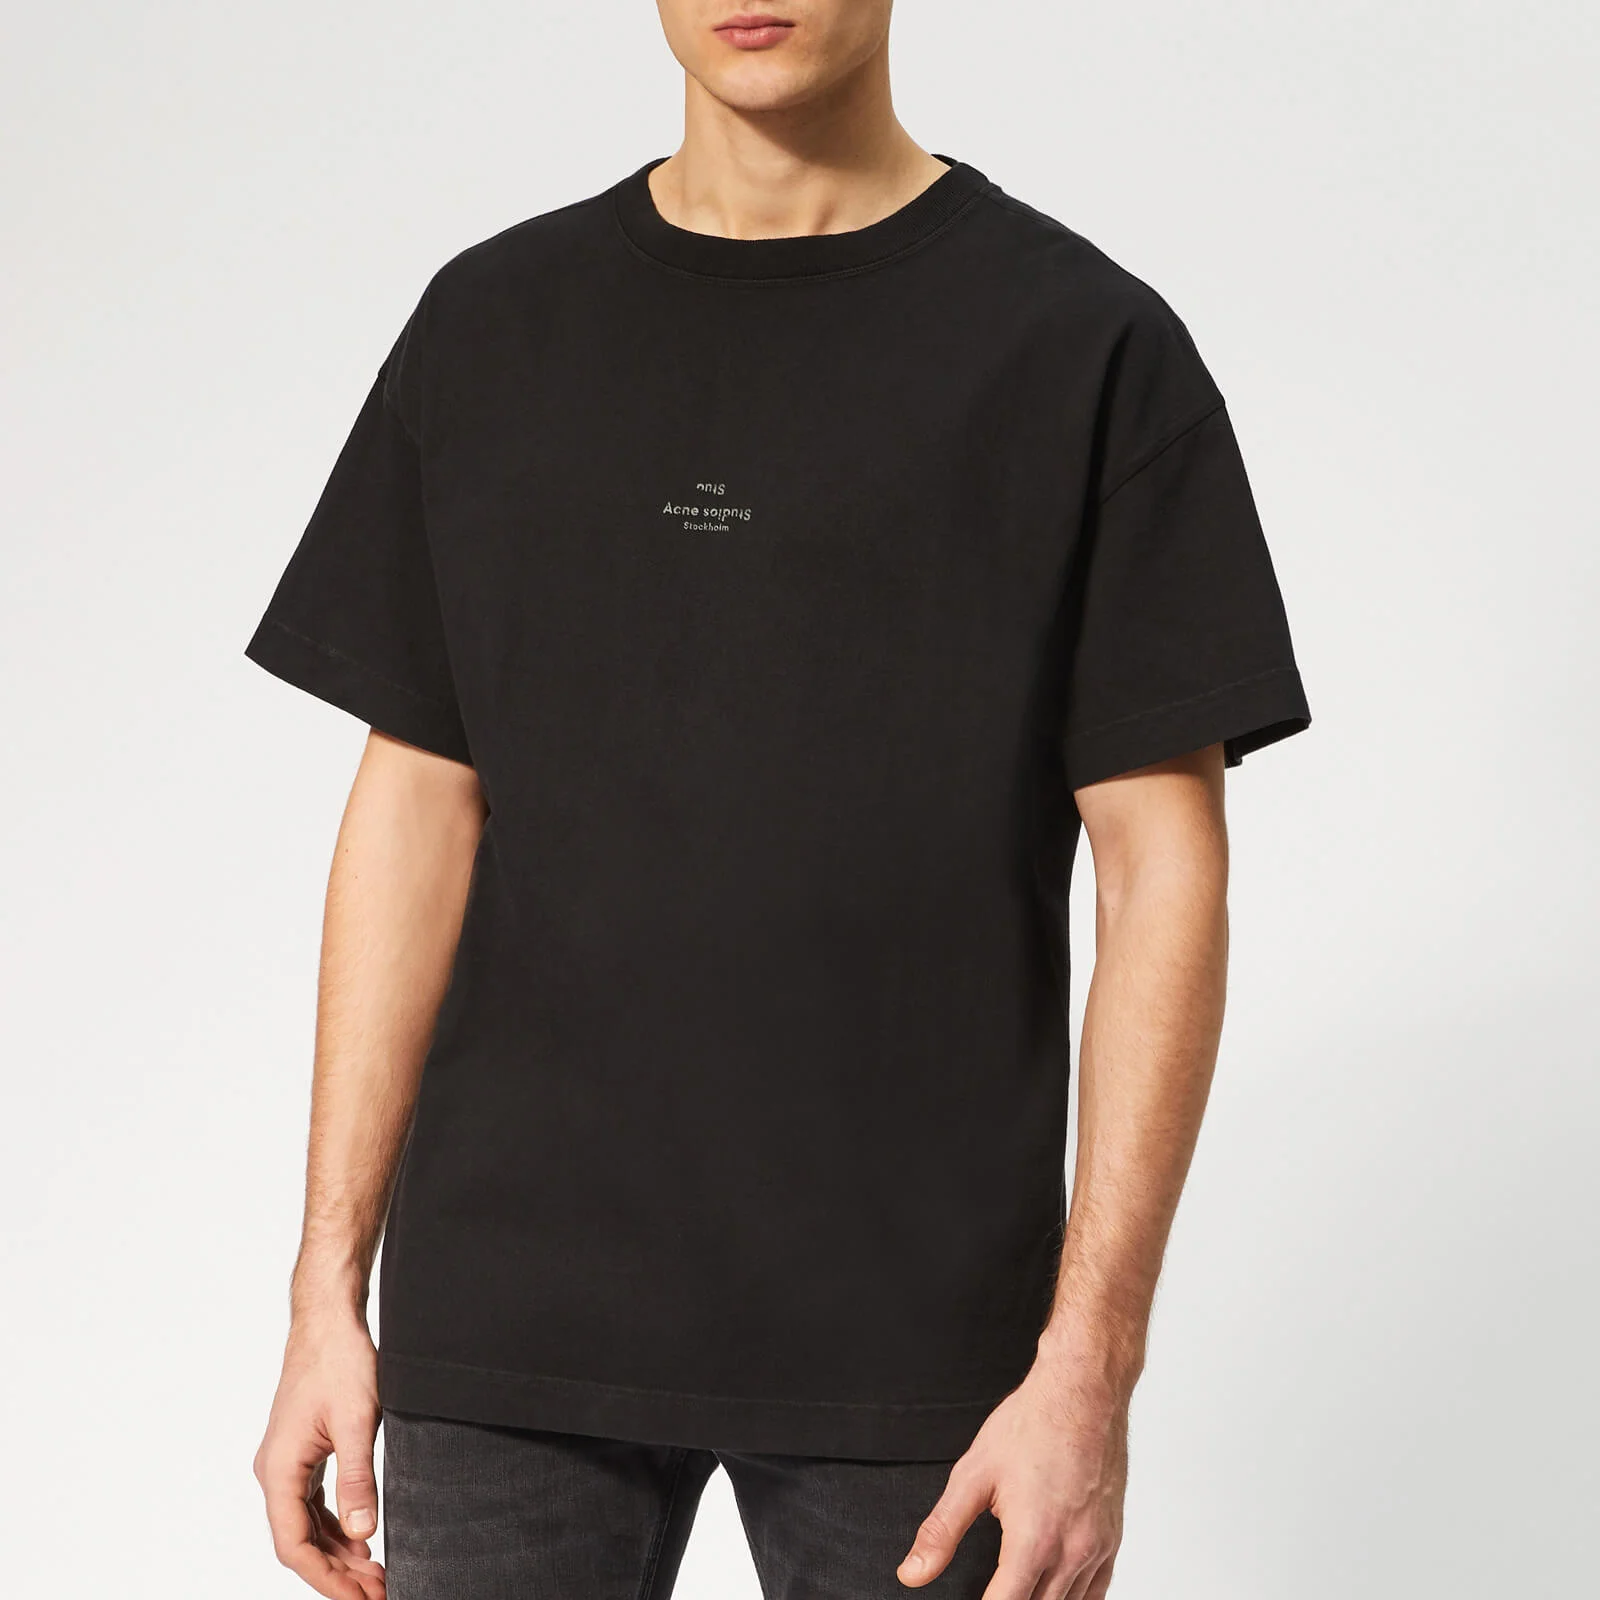 Acne Studios Men's Jaxon T-Shirt - Black Image 1